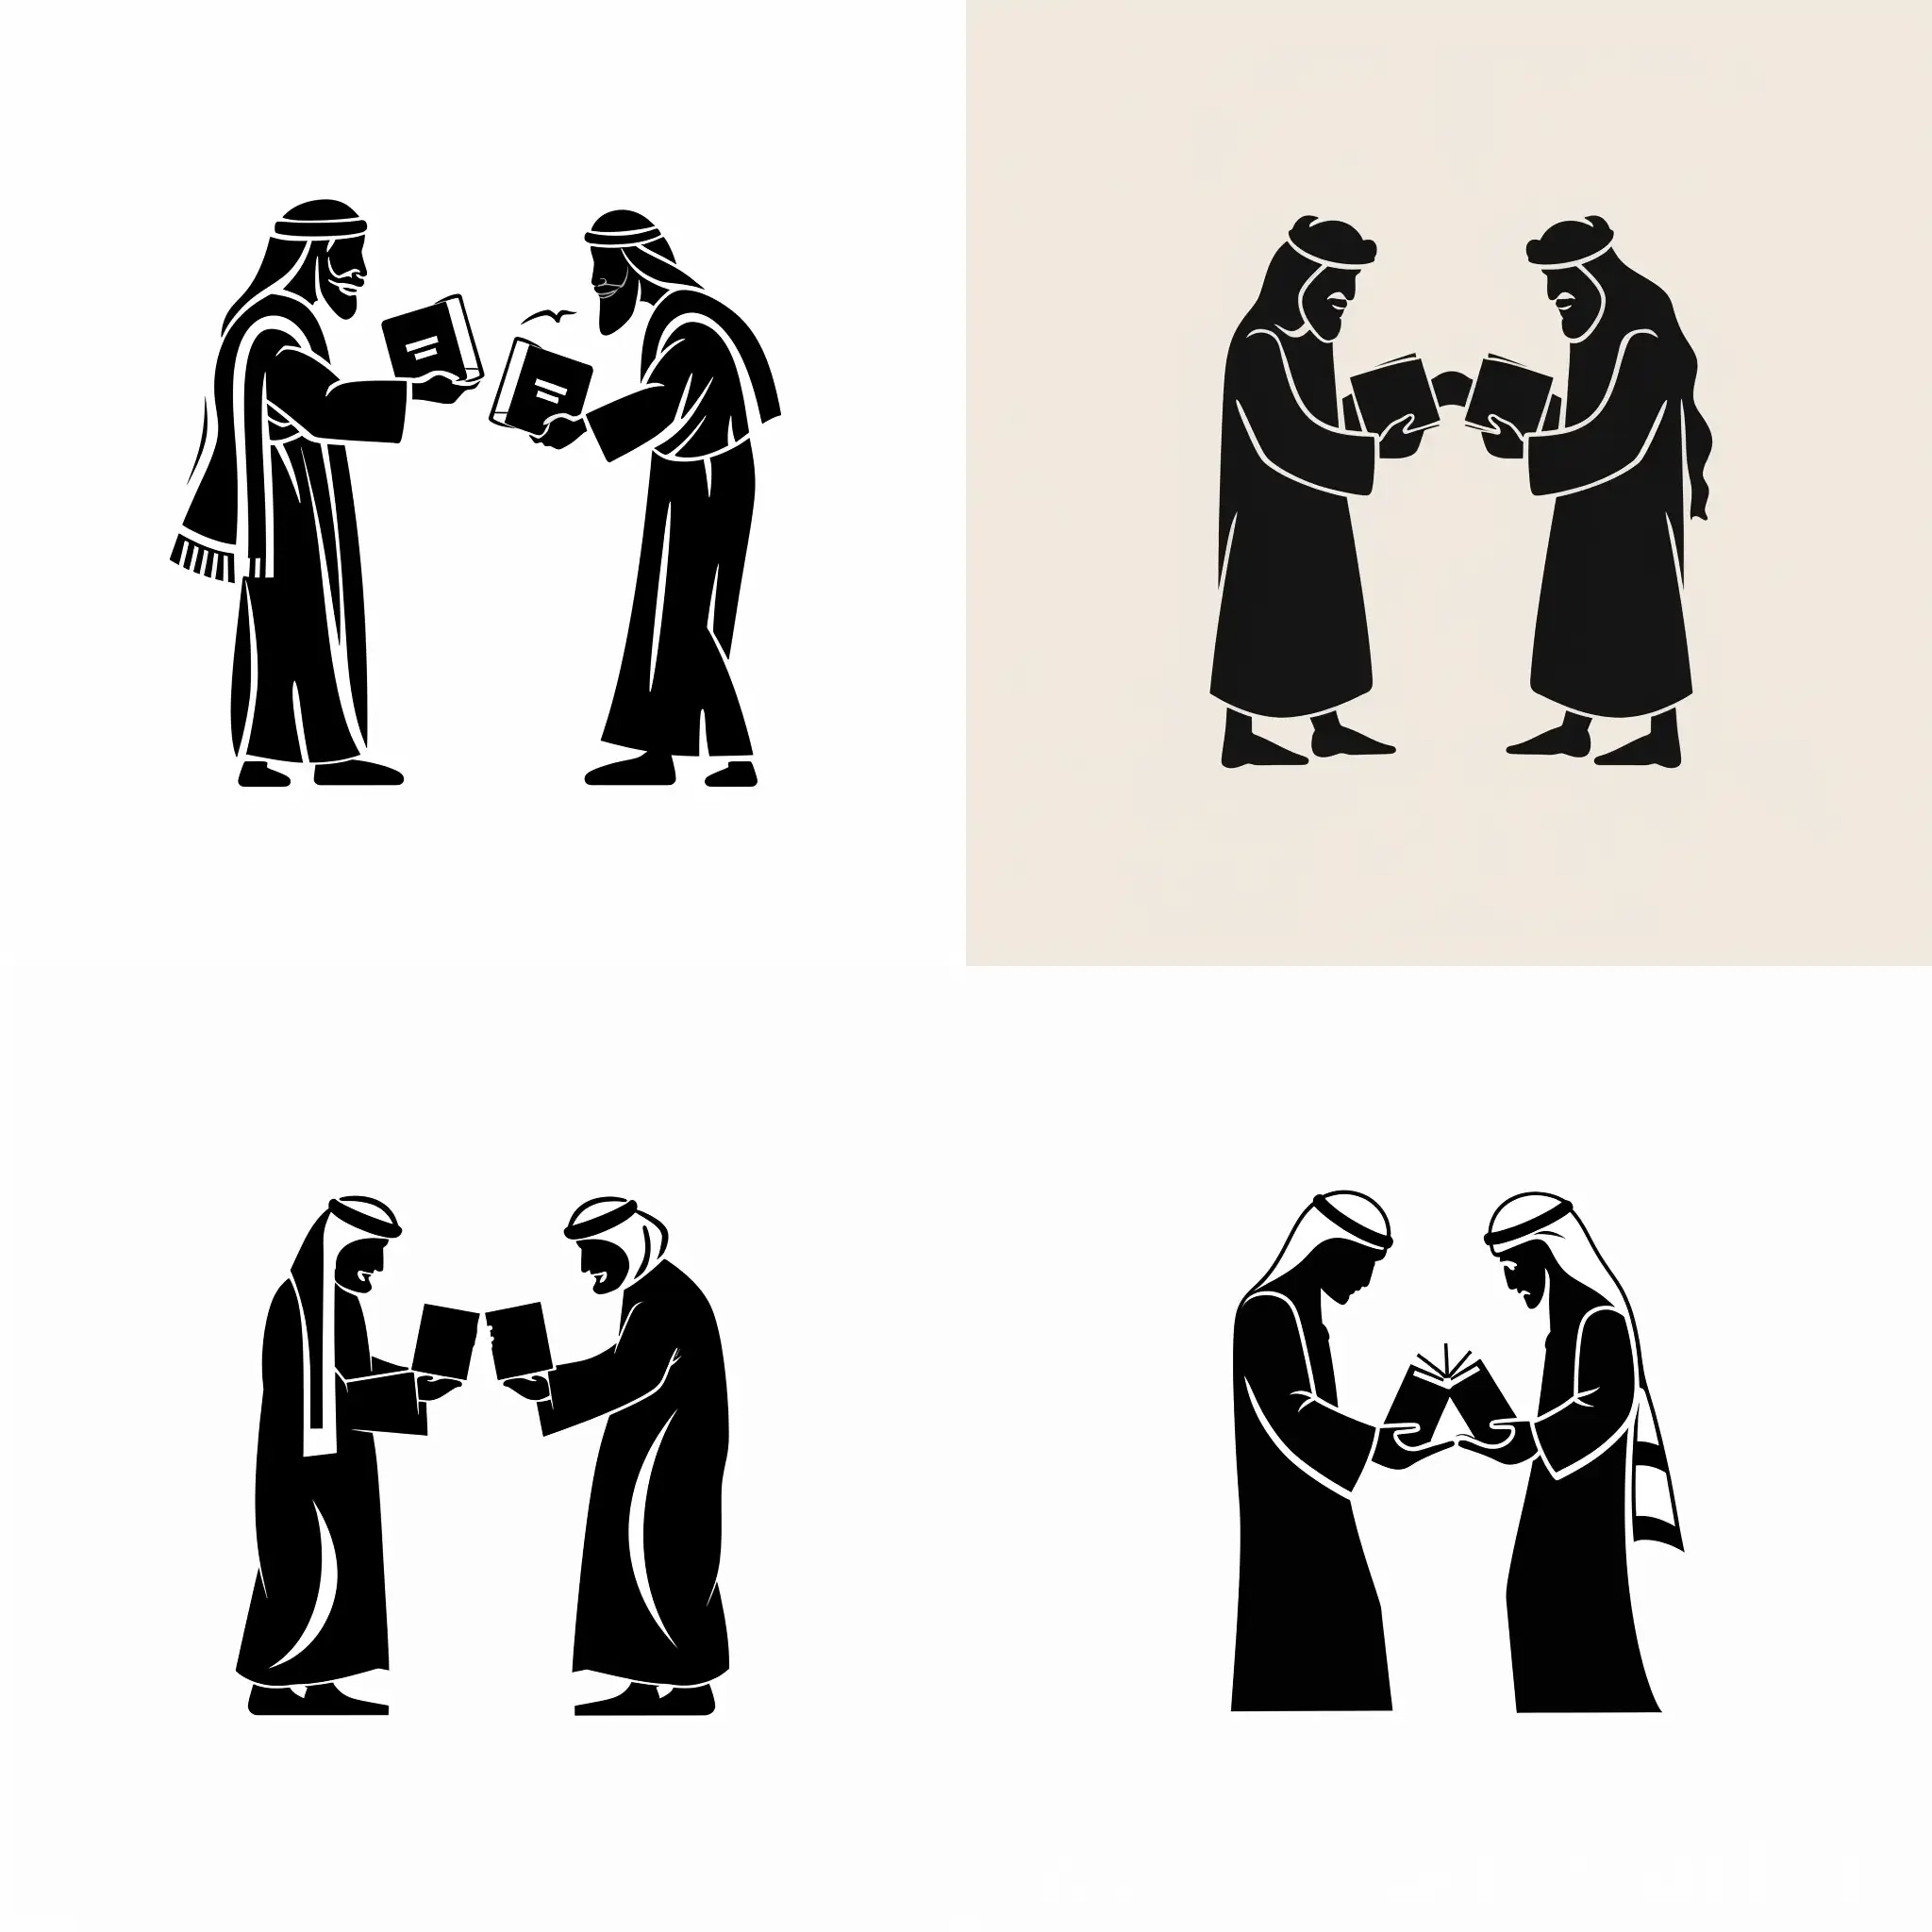 Two-Bedouin-Men-Exchanging-Books-Minimalistic-Black-Logo